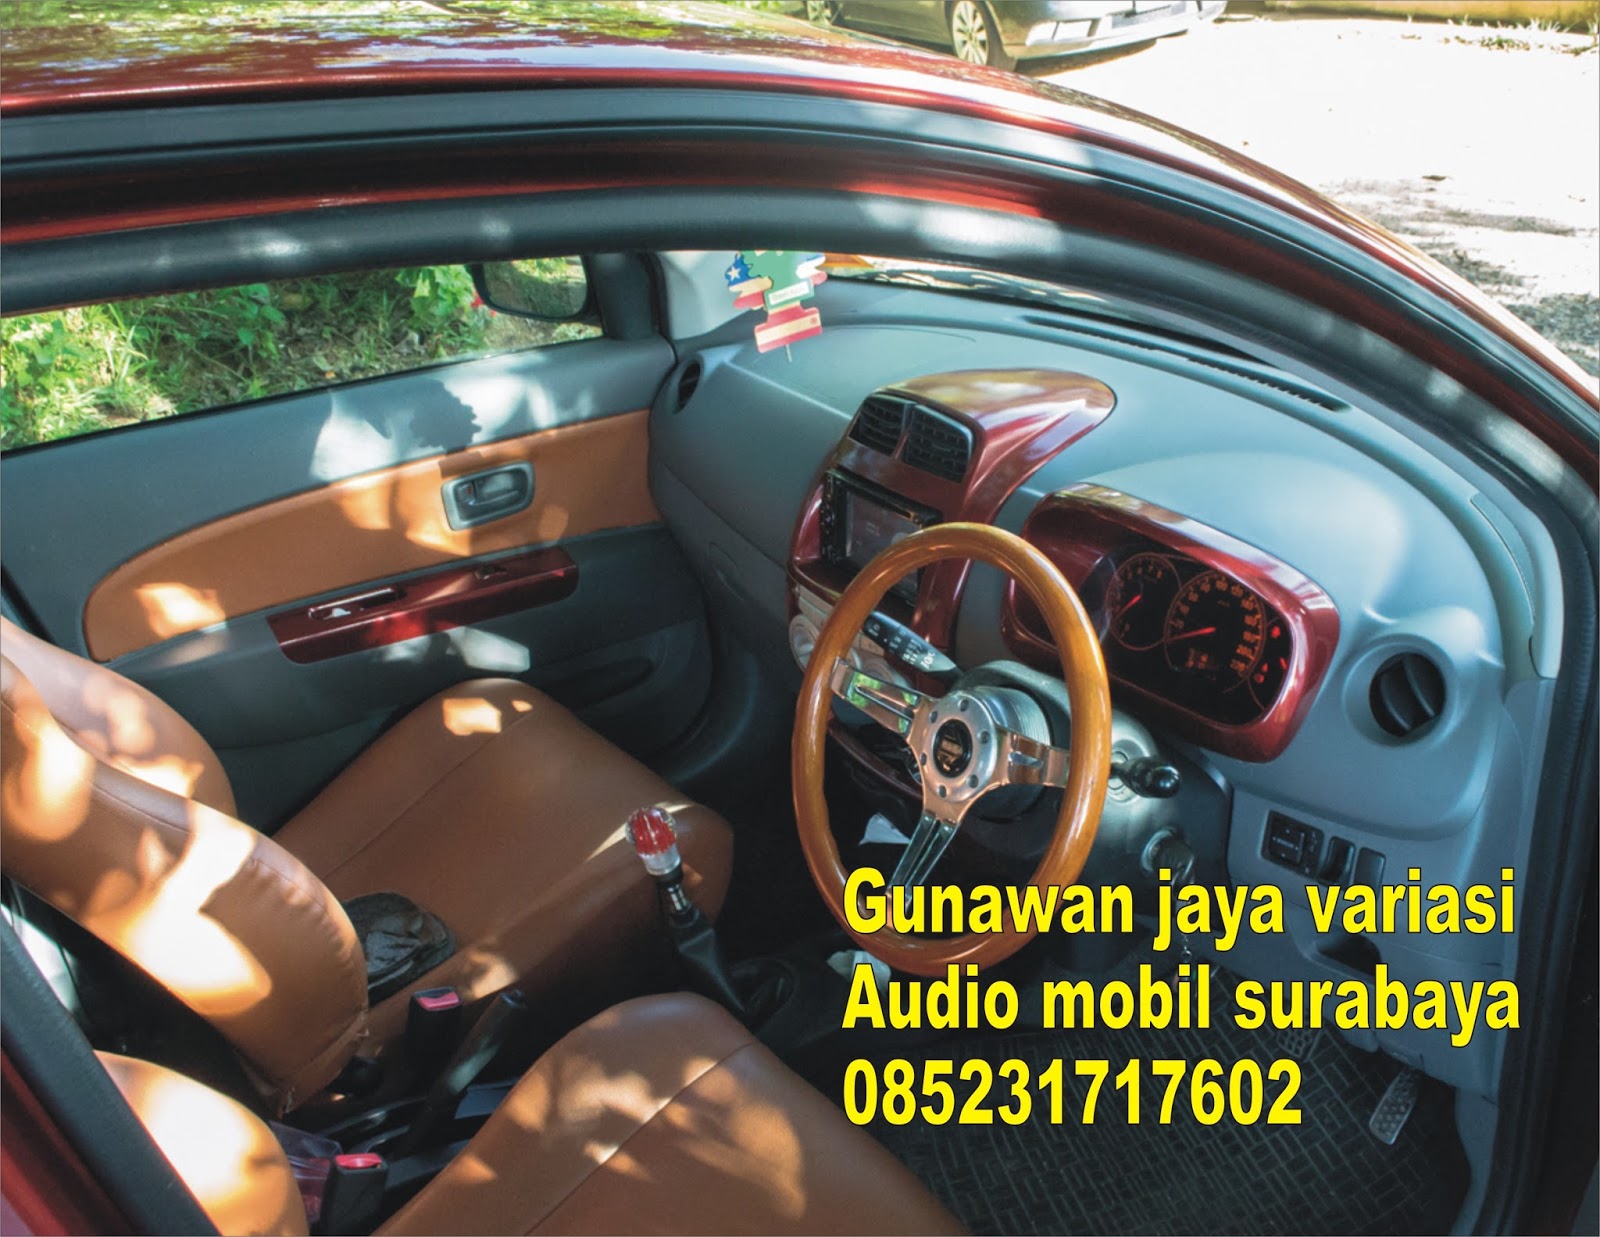 Audio Mobil Surabaya Variasi Panggilan Surabaya 085231717602